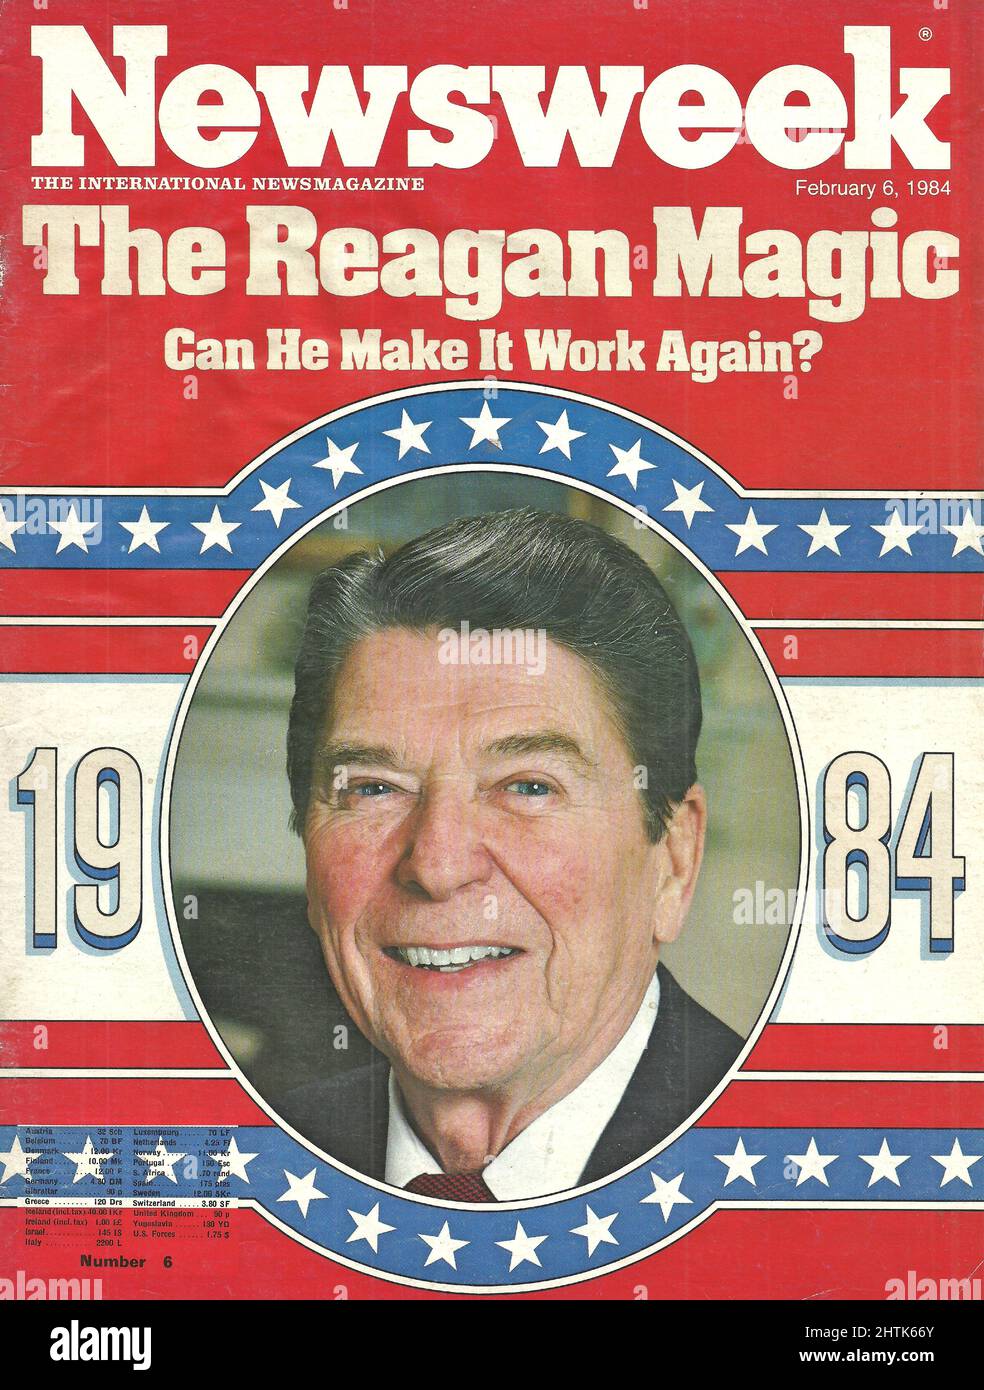 Newsweek cover February 6 1984 The Reagan Magic, Ronald Reagan on the cover of The international Newsmagazine Newsweek Stock Photo